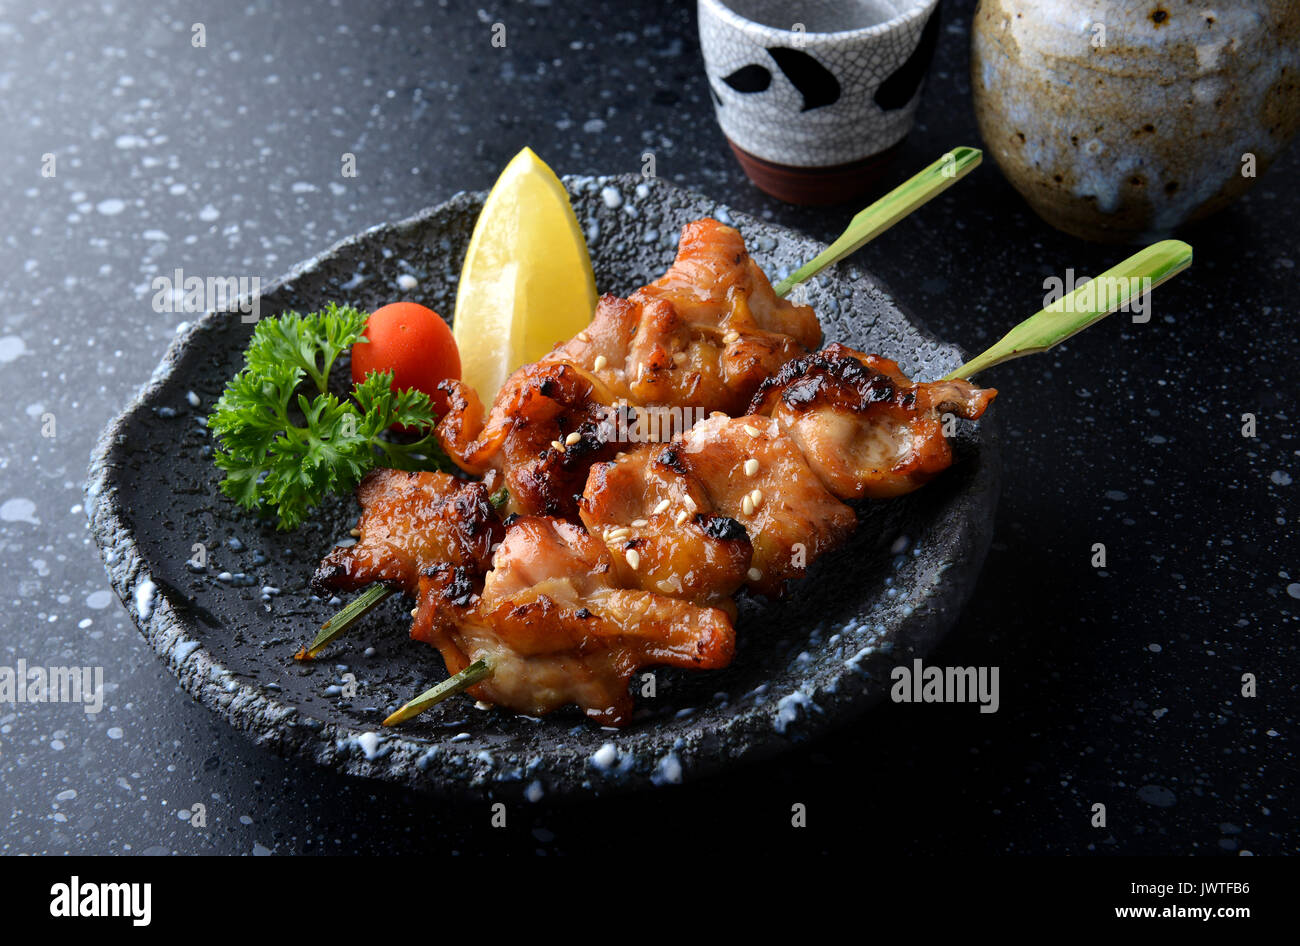 Japanese chicken grill or yakitori serve in izakaya style restourant set on Japanese style dish with flash lighting. Stock Photo